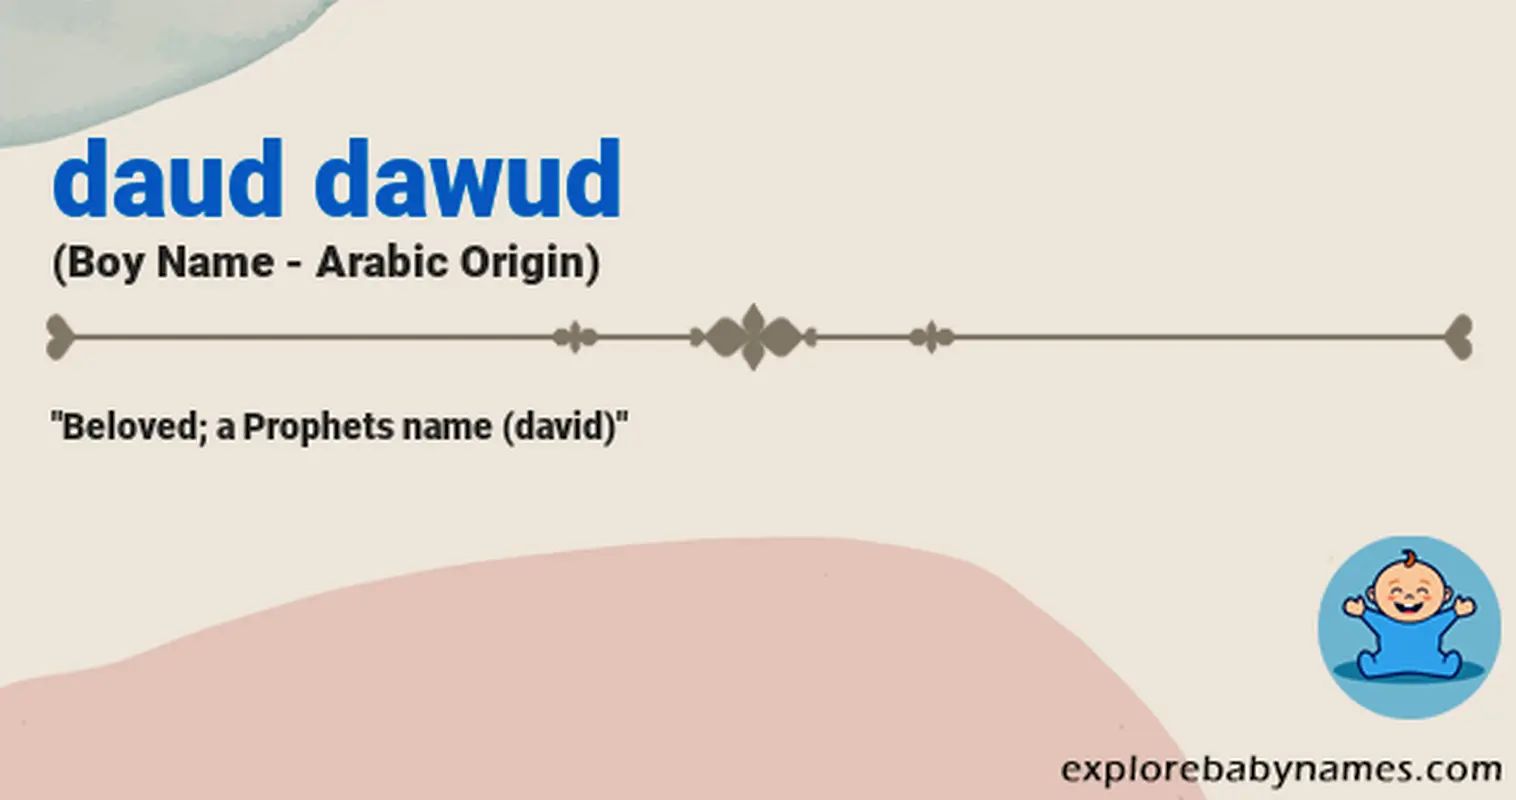 Meaning of Daud dawud